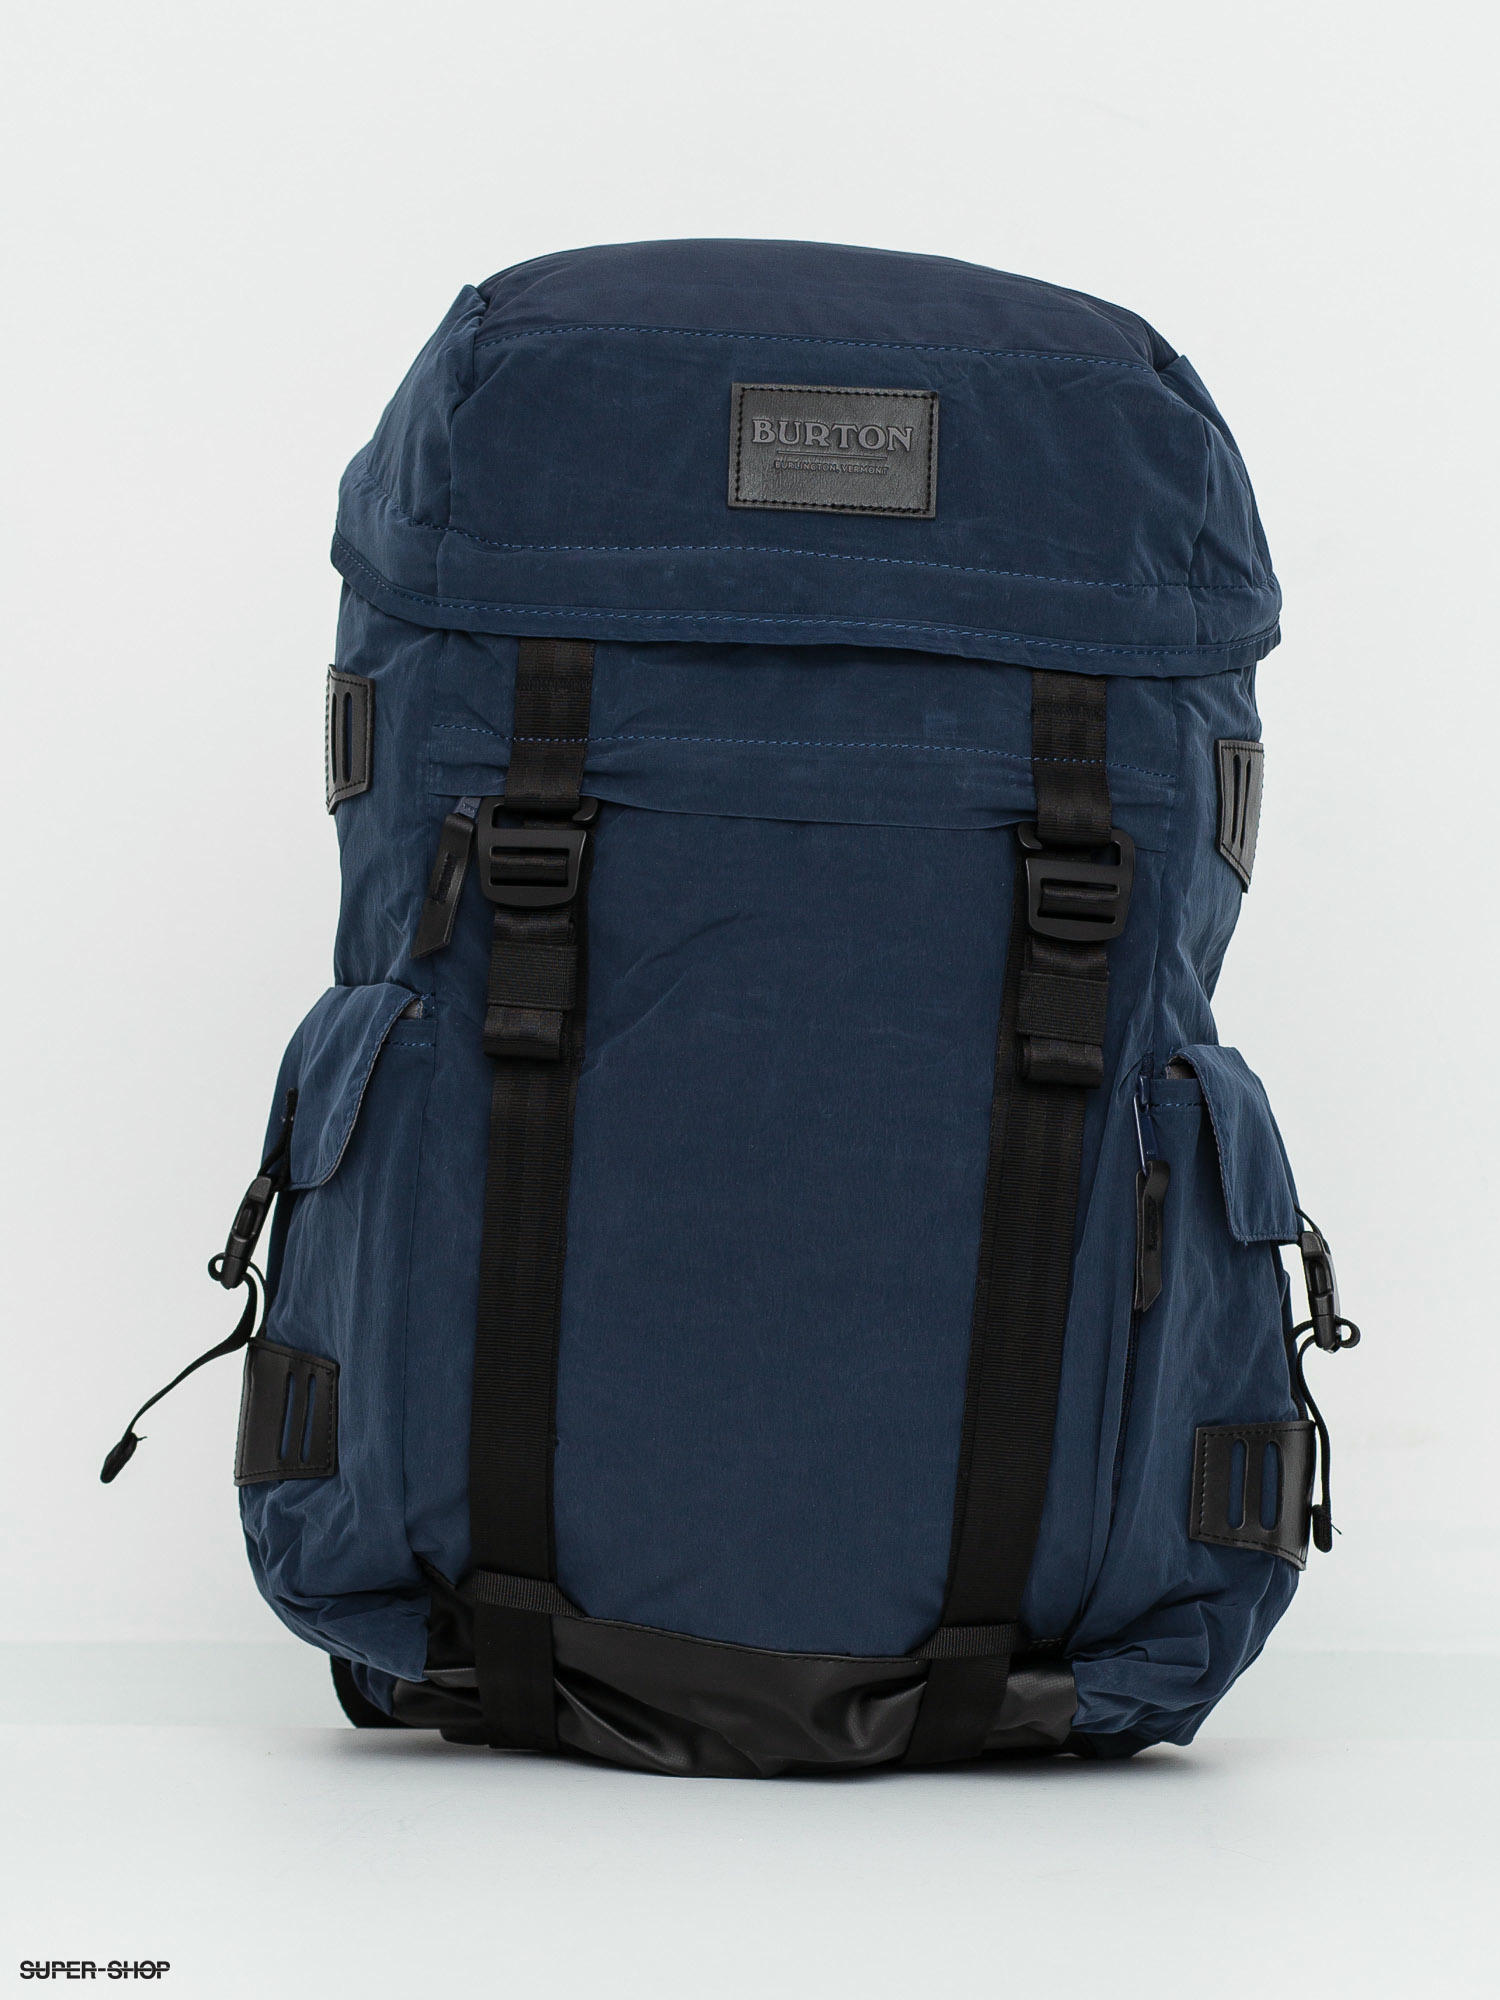 Burton - Haversack 5L Small Bag - Dress Blue